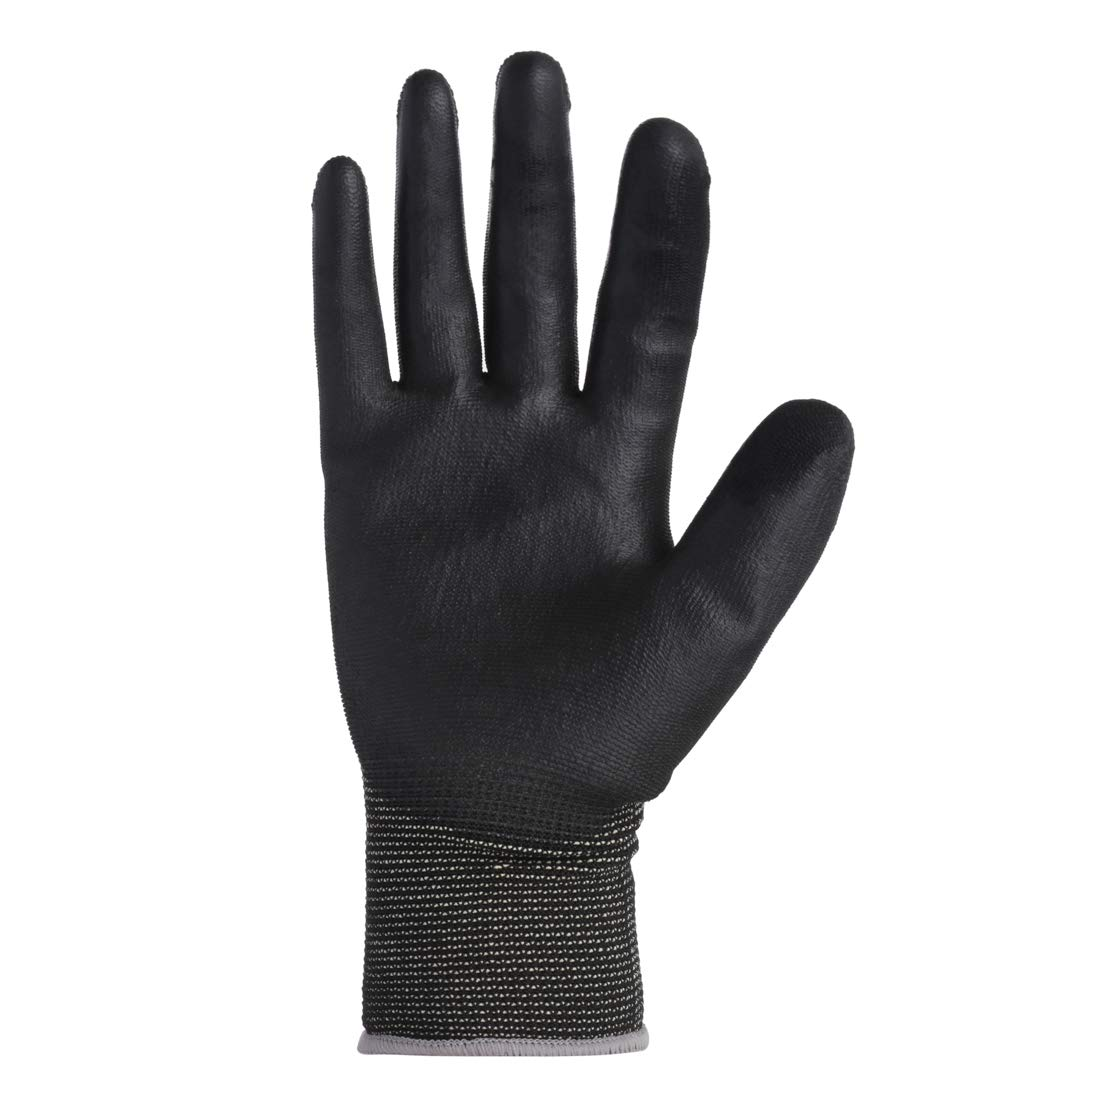 /storage/photos/1/karam new product/Karam Safety gloves HS 22 2.png